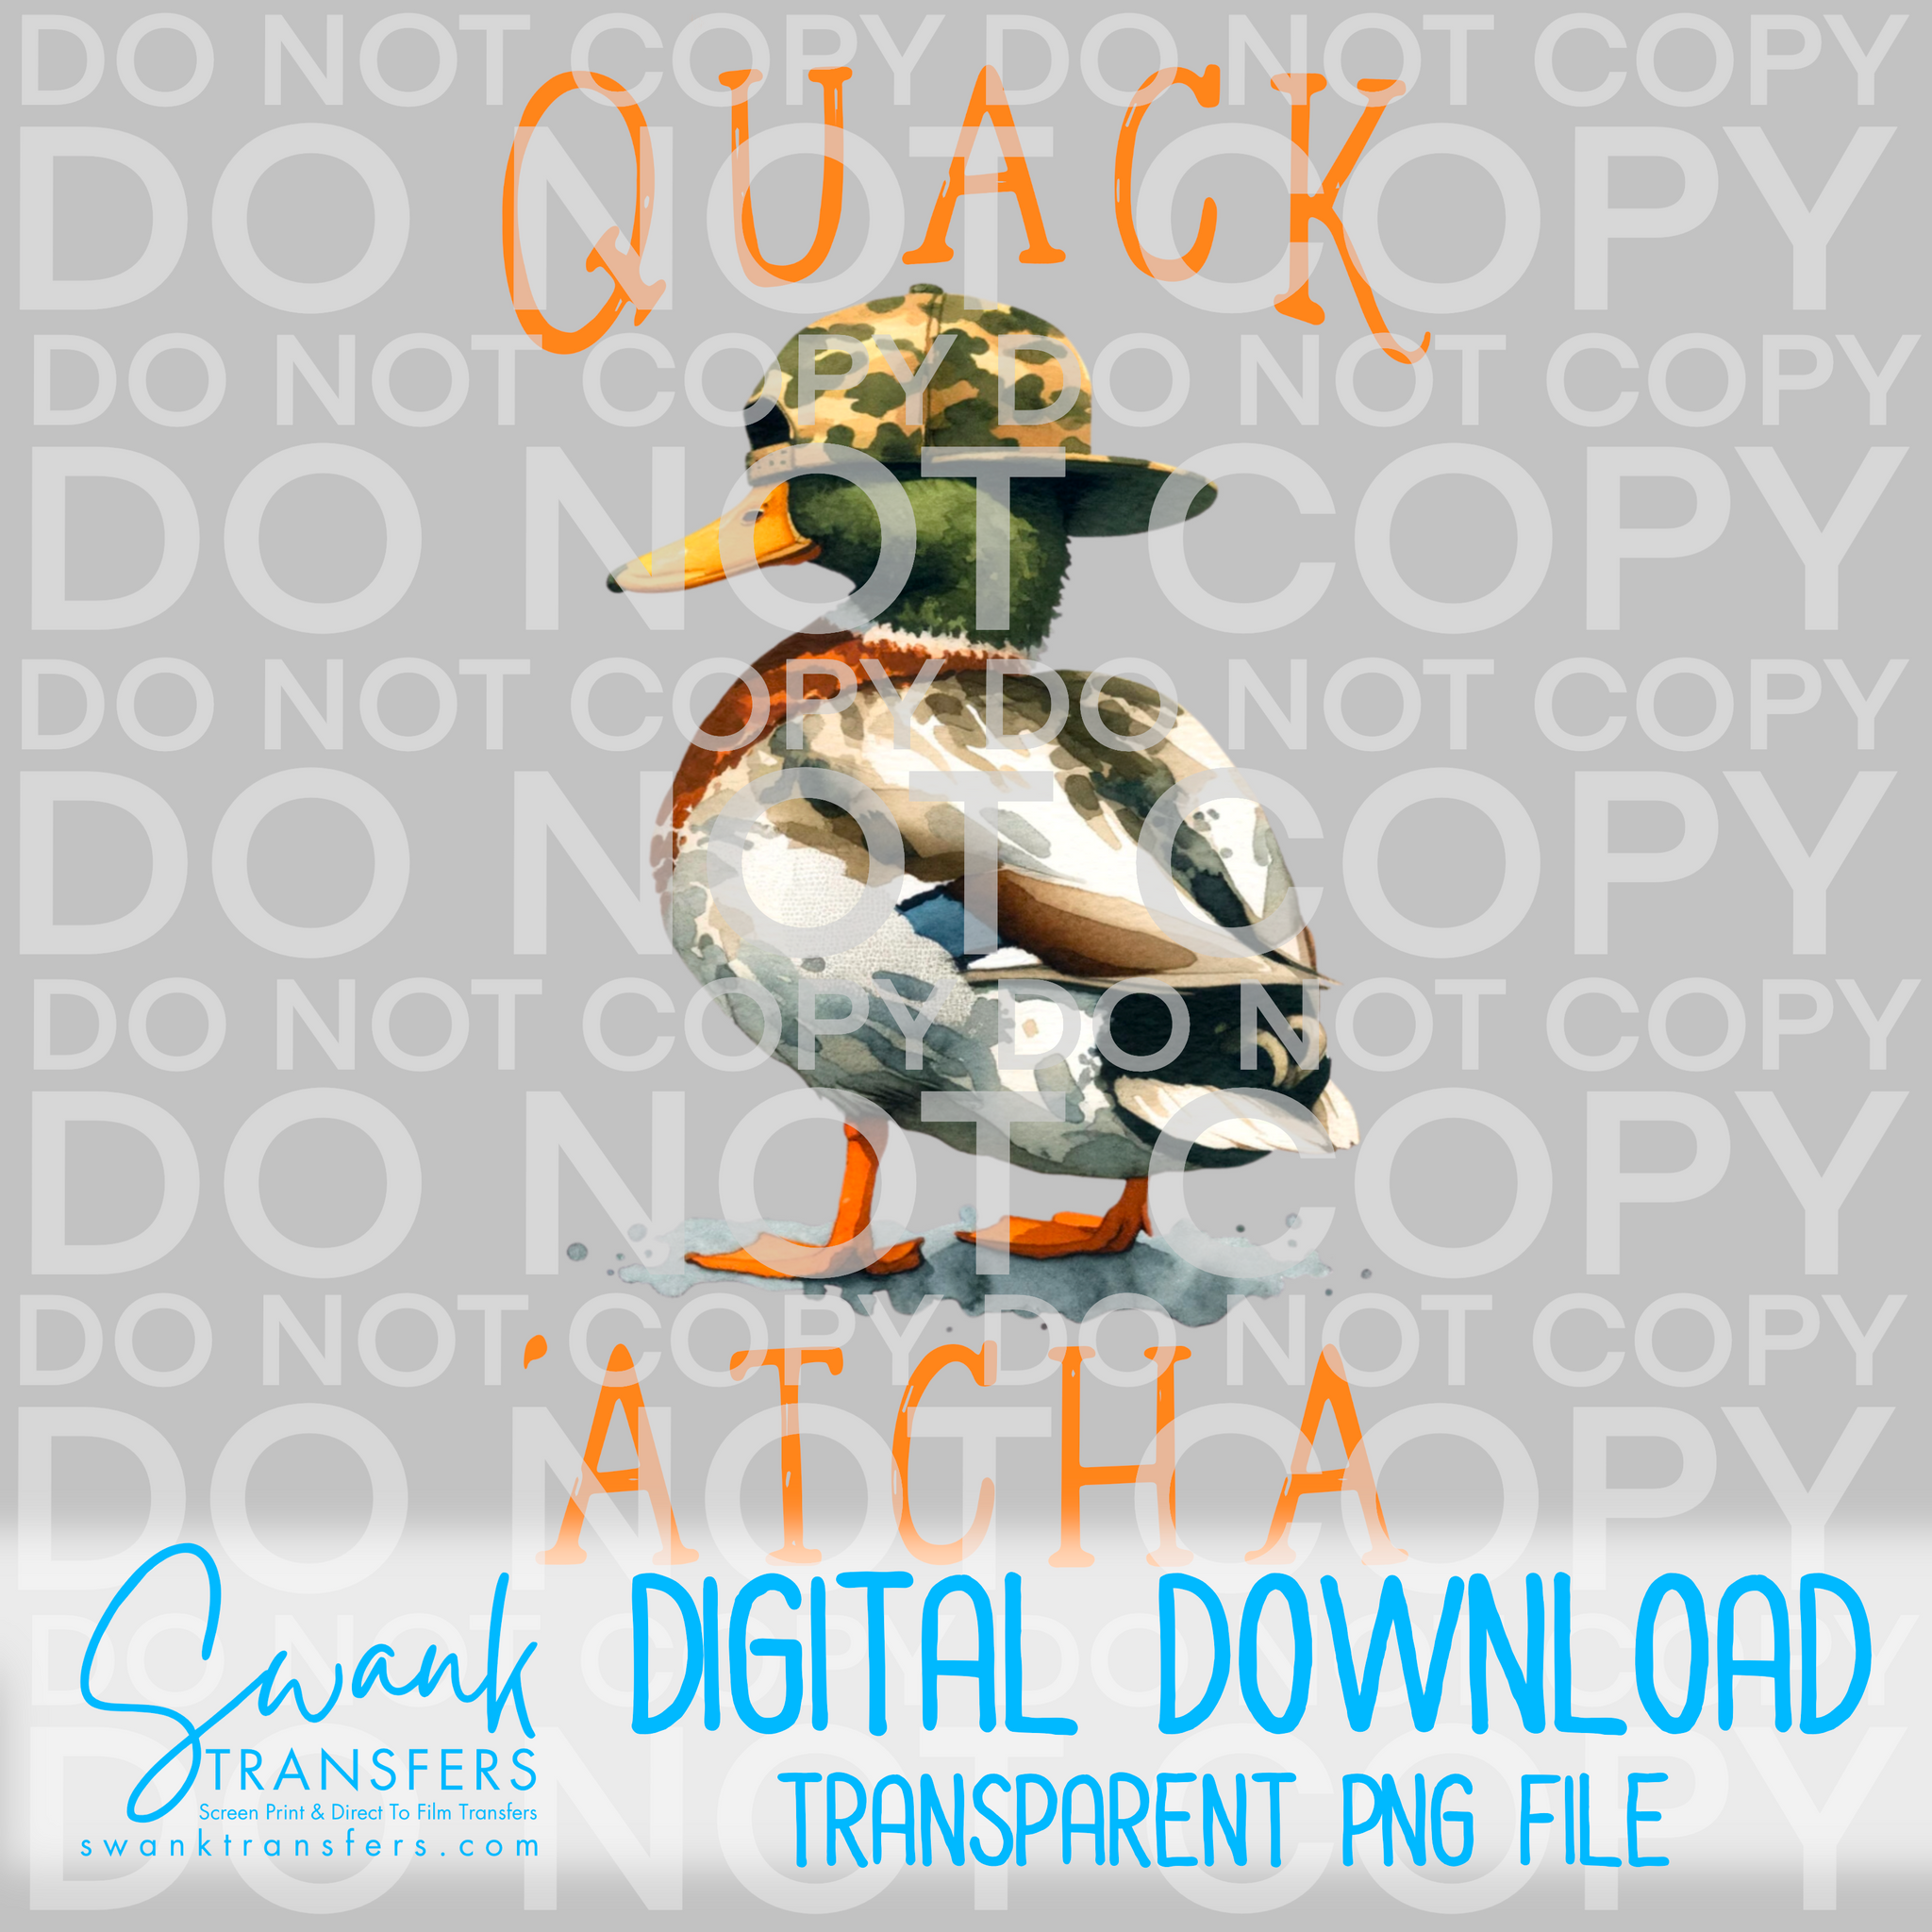 Quack 'Atcha - PNG FILE DIGITAL DOWNLOAD